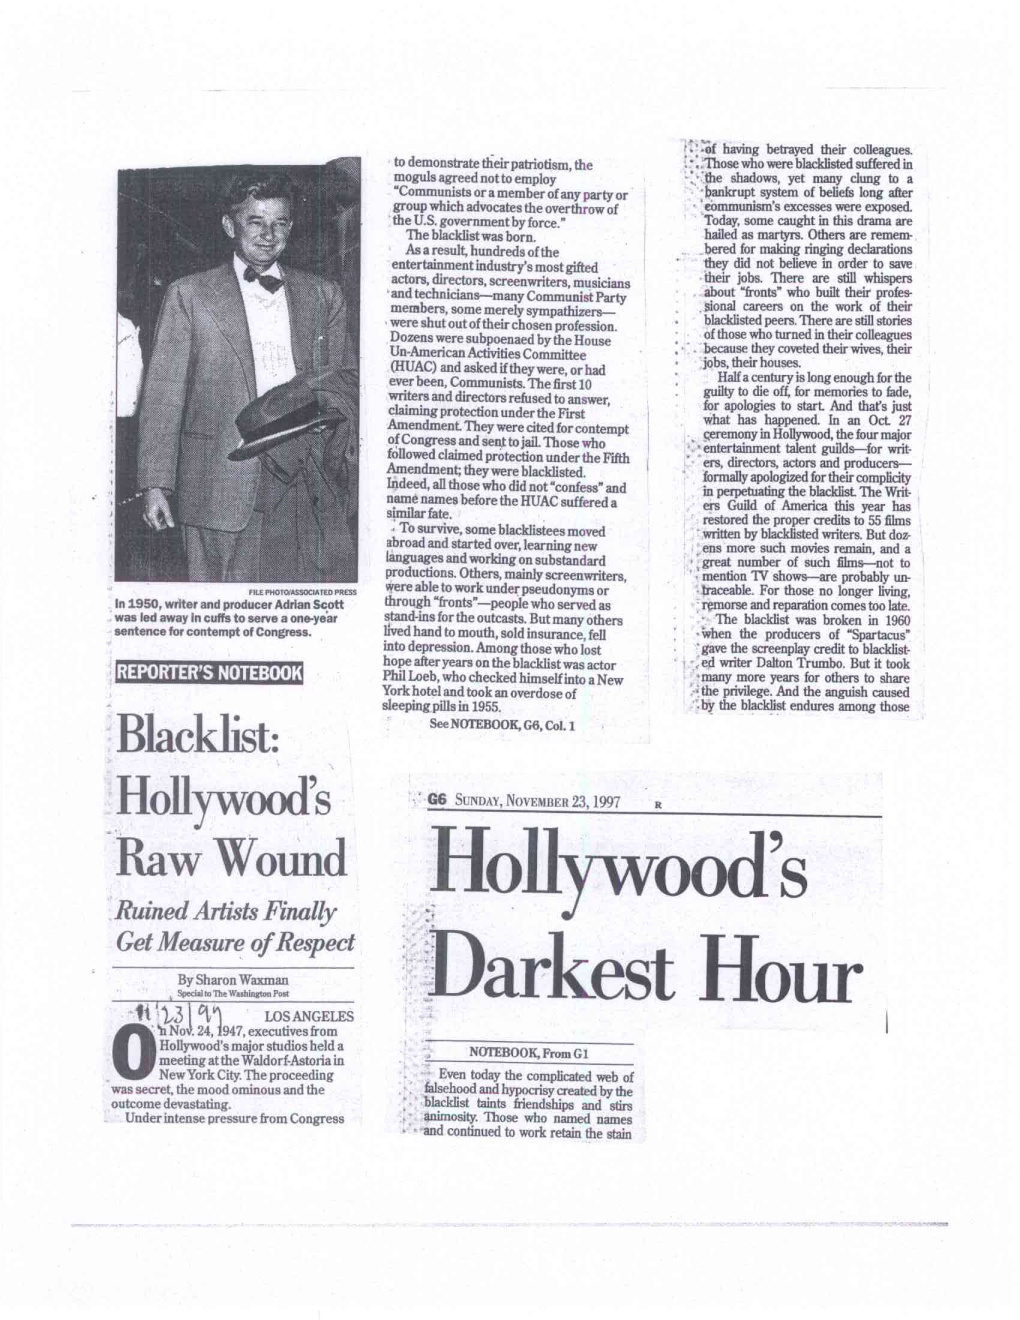 Hollywood's Darkest Hour